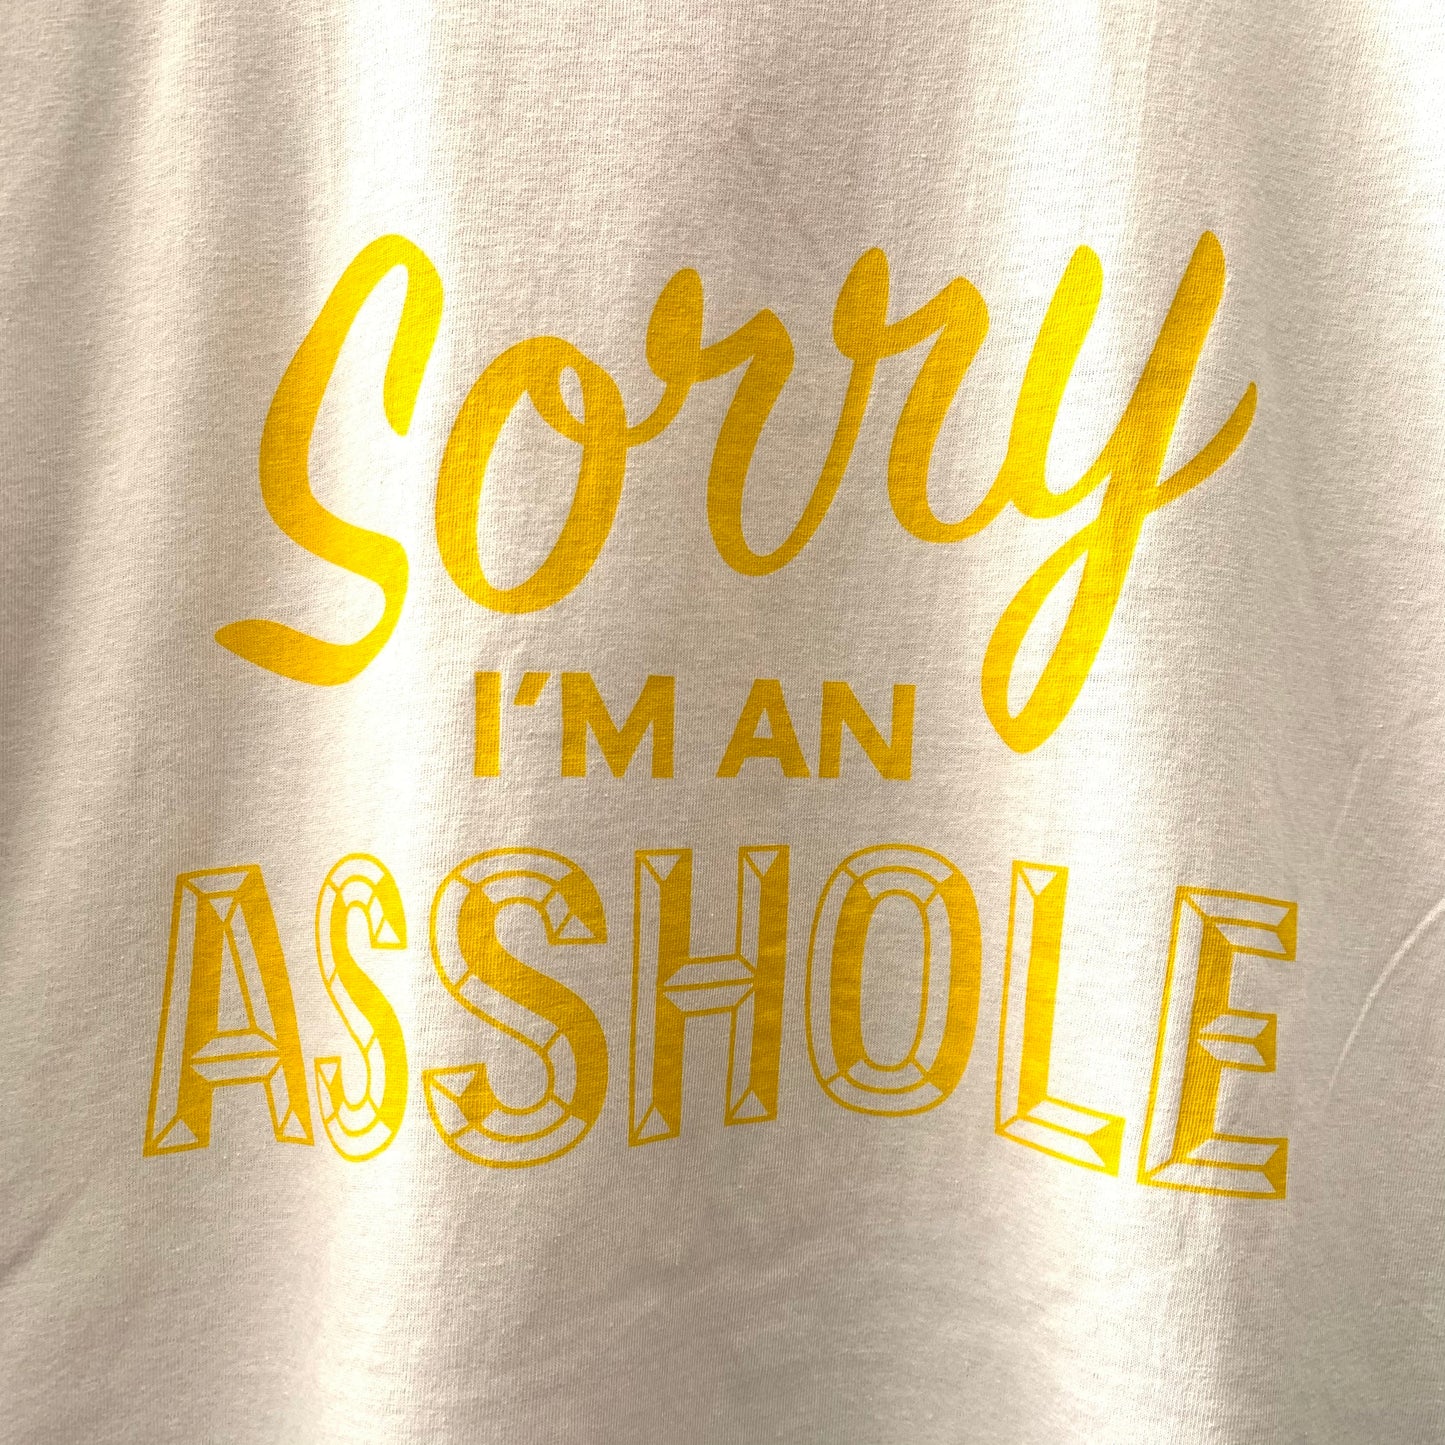 Sorry I'm an Asshole T-shirt